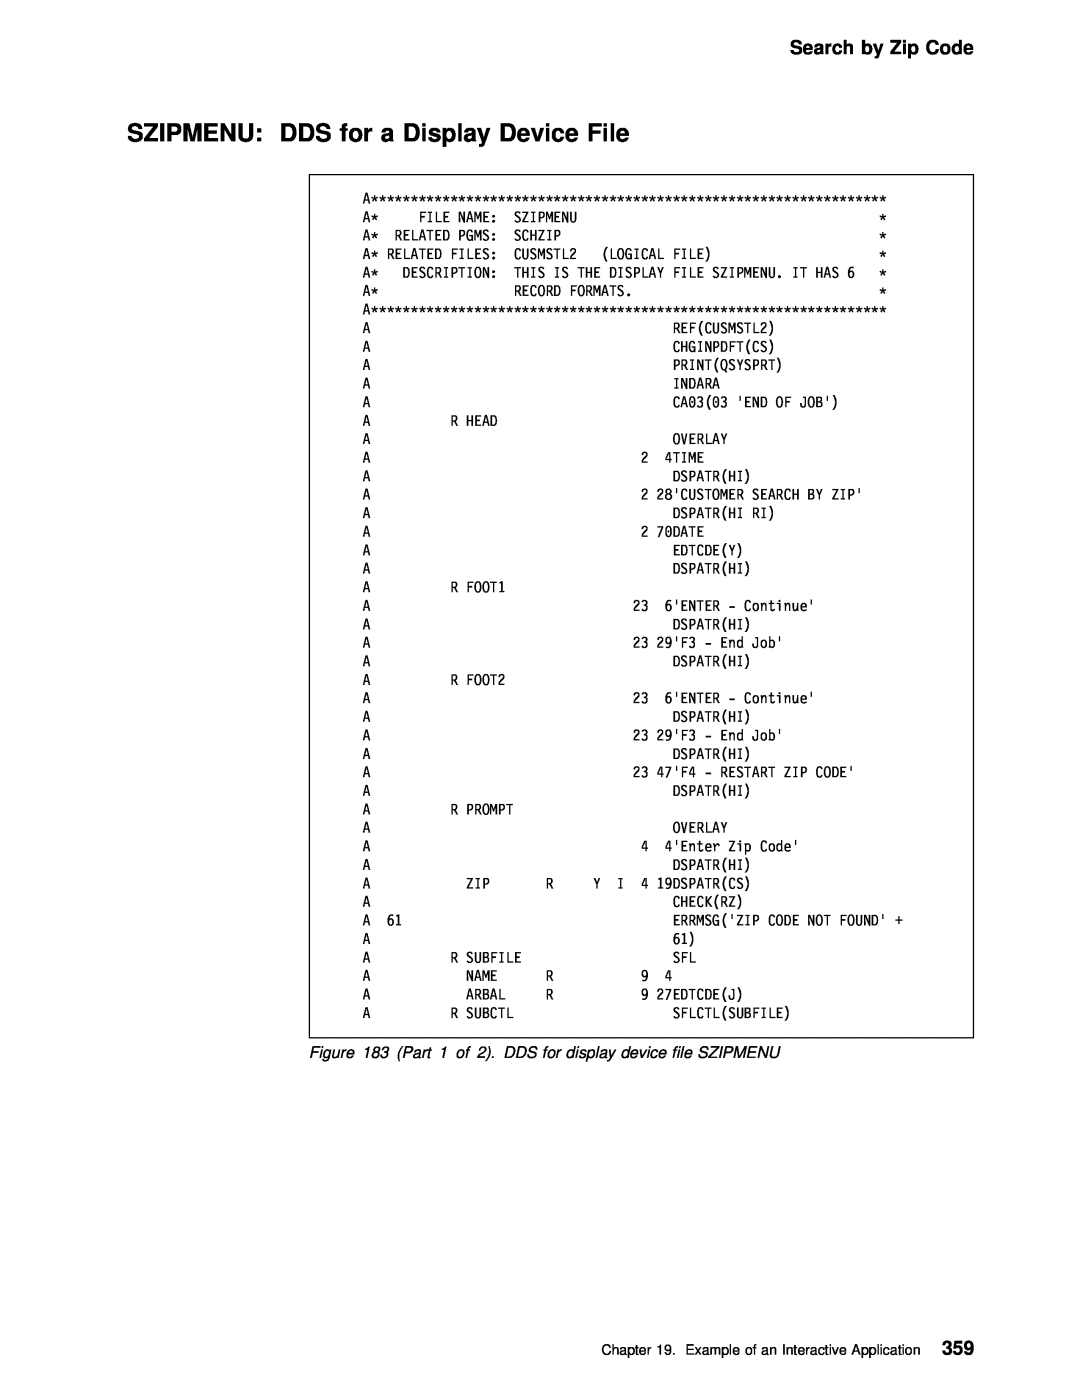 IBM AS/400 manual Szipmenu Dds, Display, File, Device, Search by Zip Code 